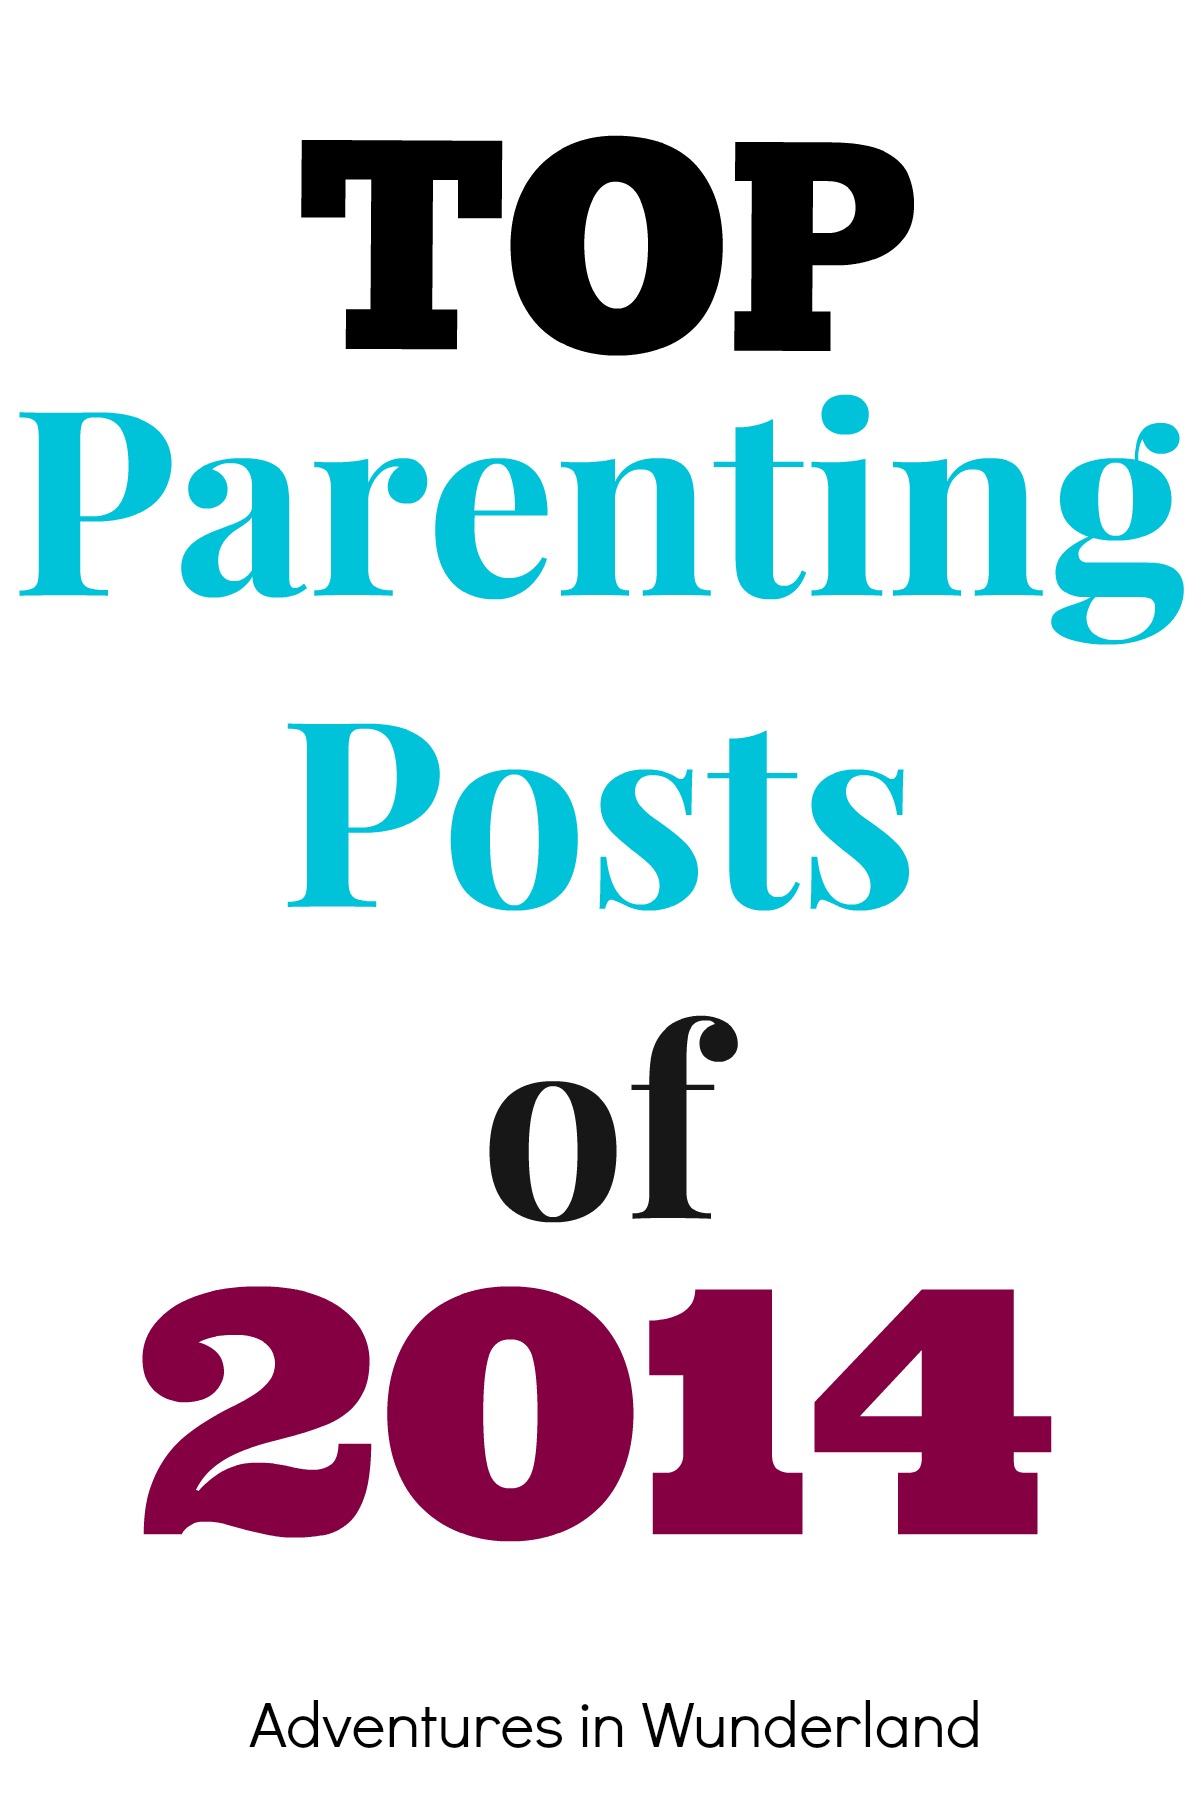 Top Parenting Posts of 2014